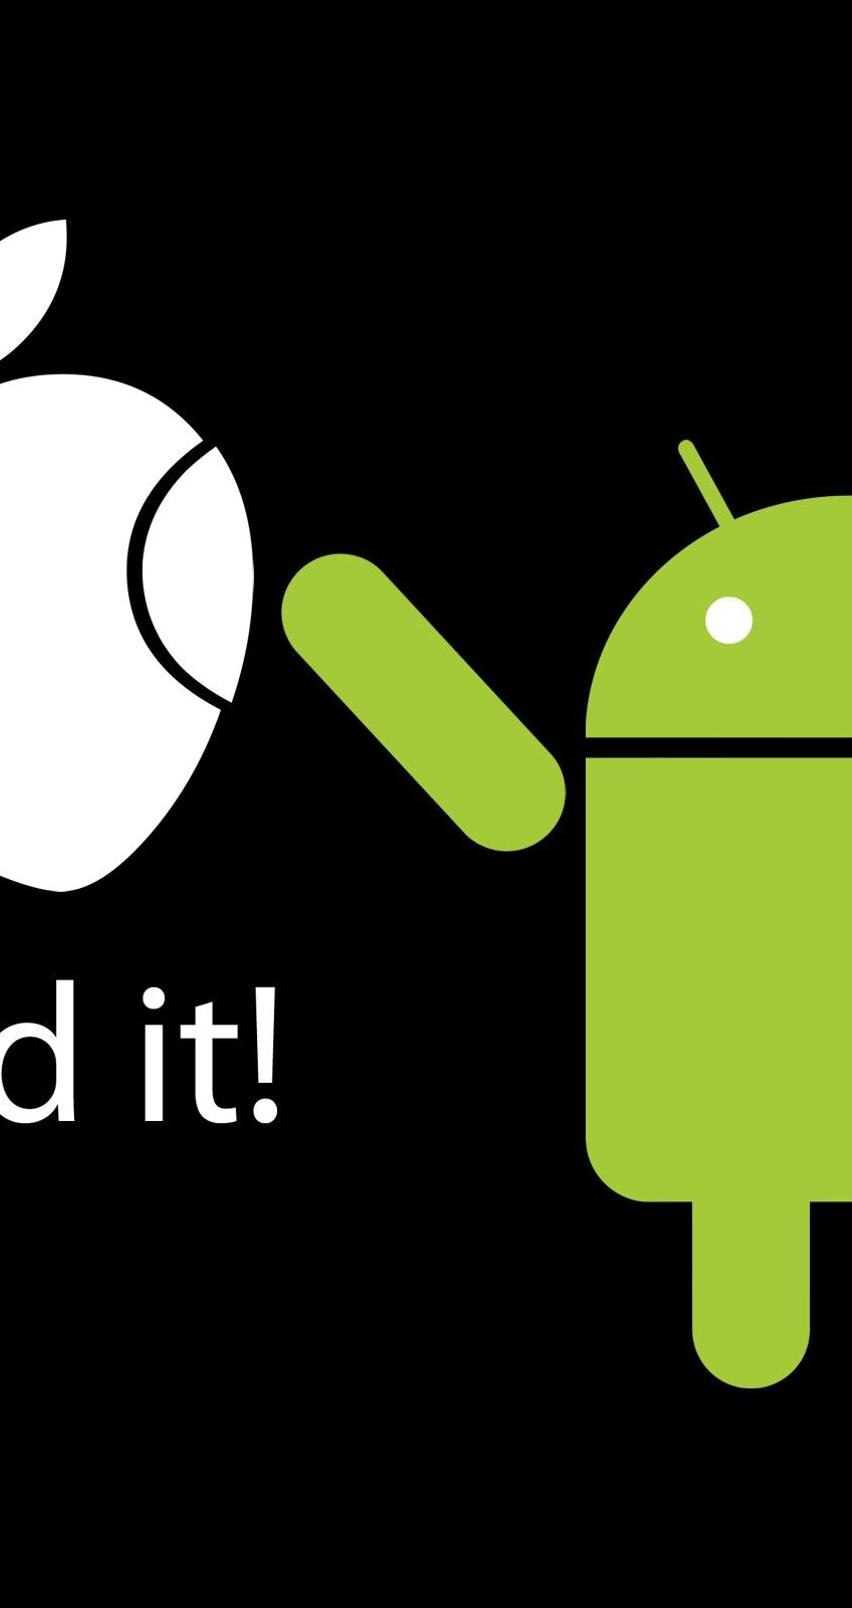 Apple vs Android - I fixed it - Funny wallpaper